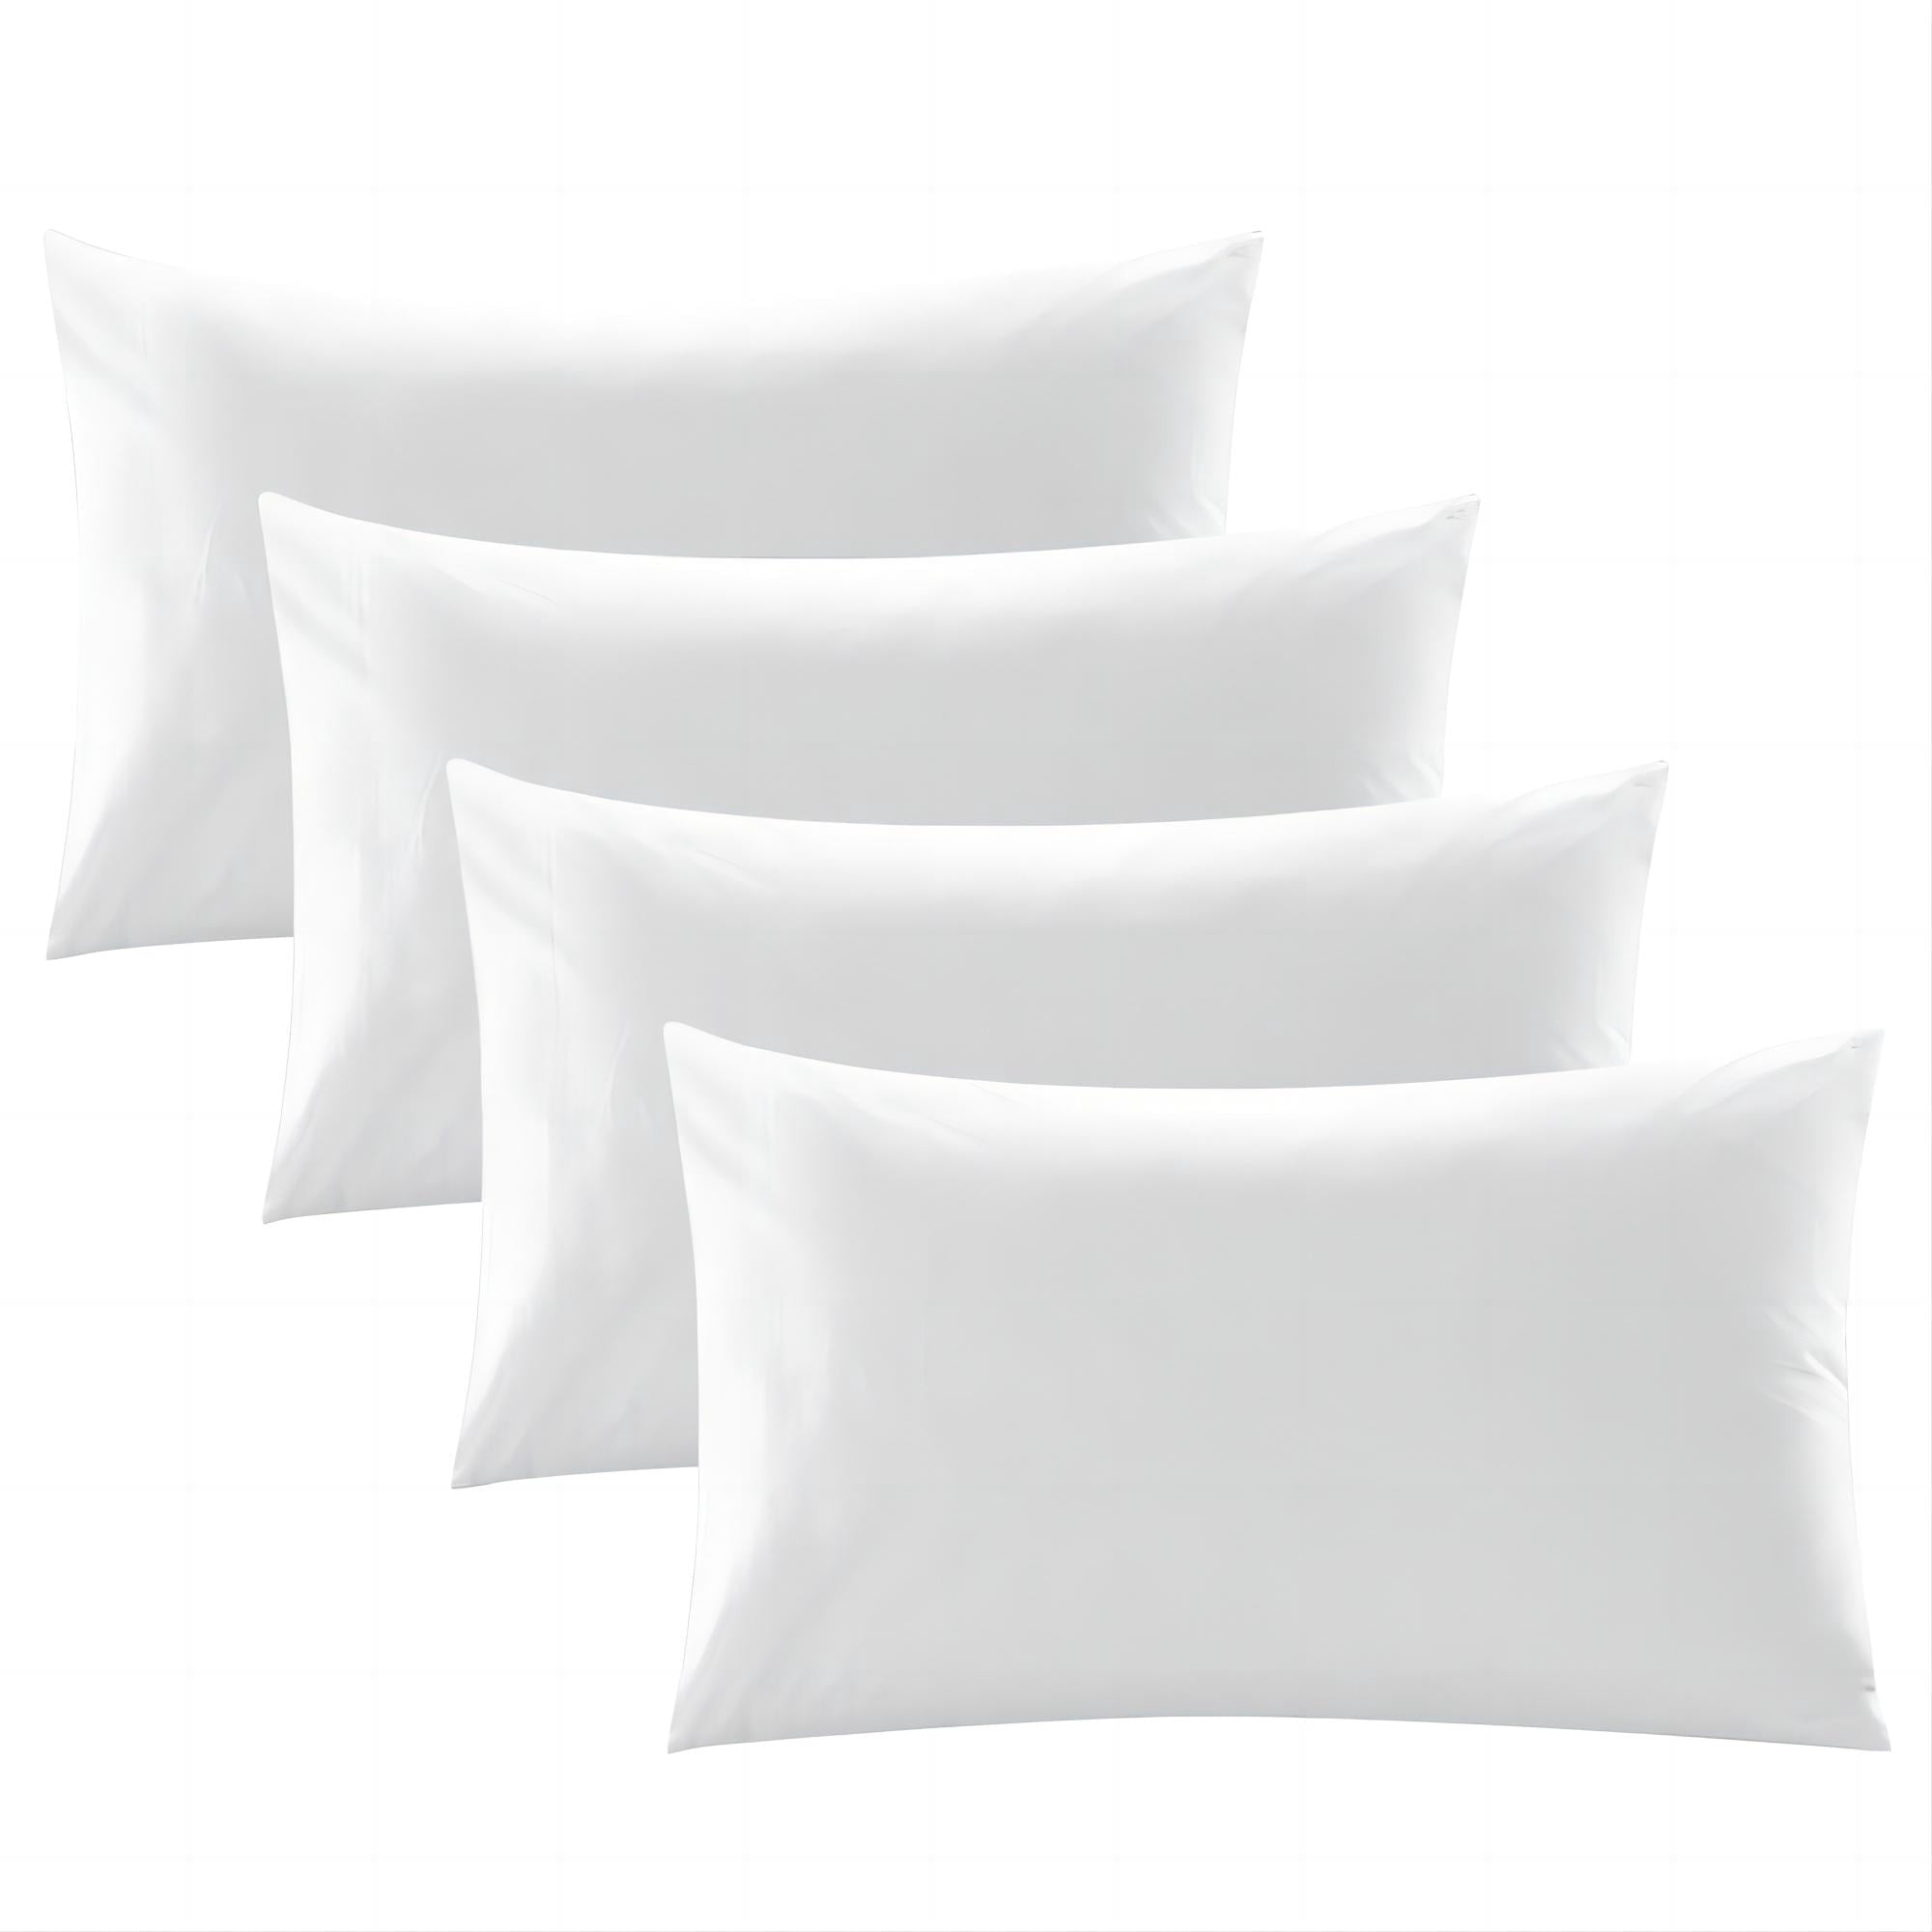 ANMINY Pillowcase set of 4 Pillow Cases-10